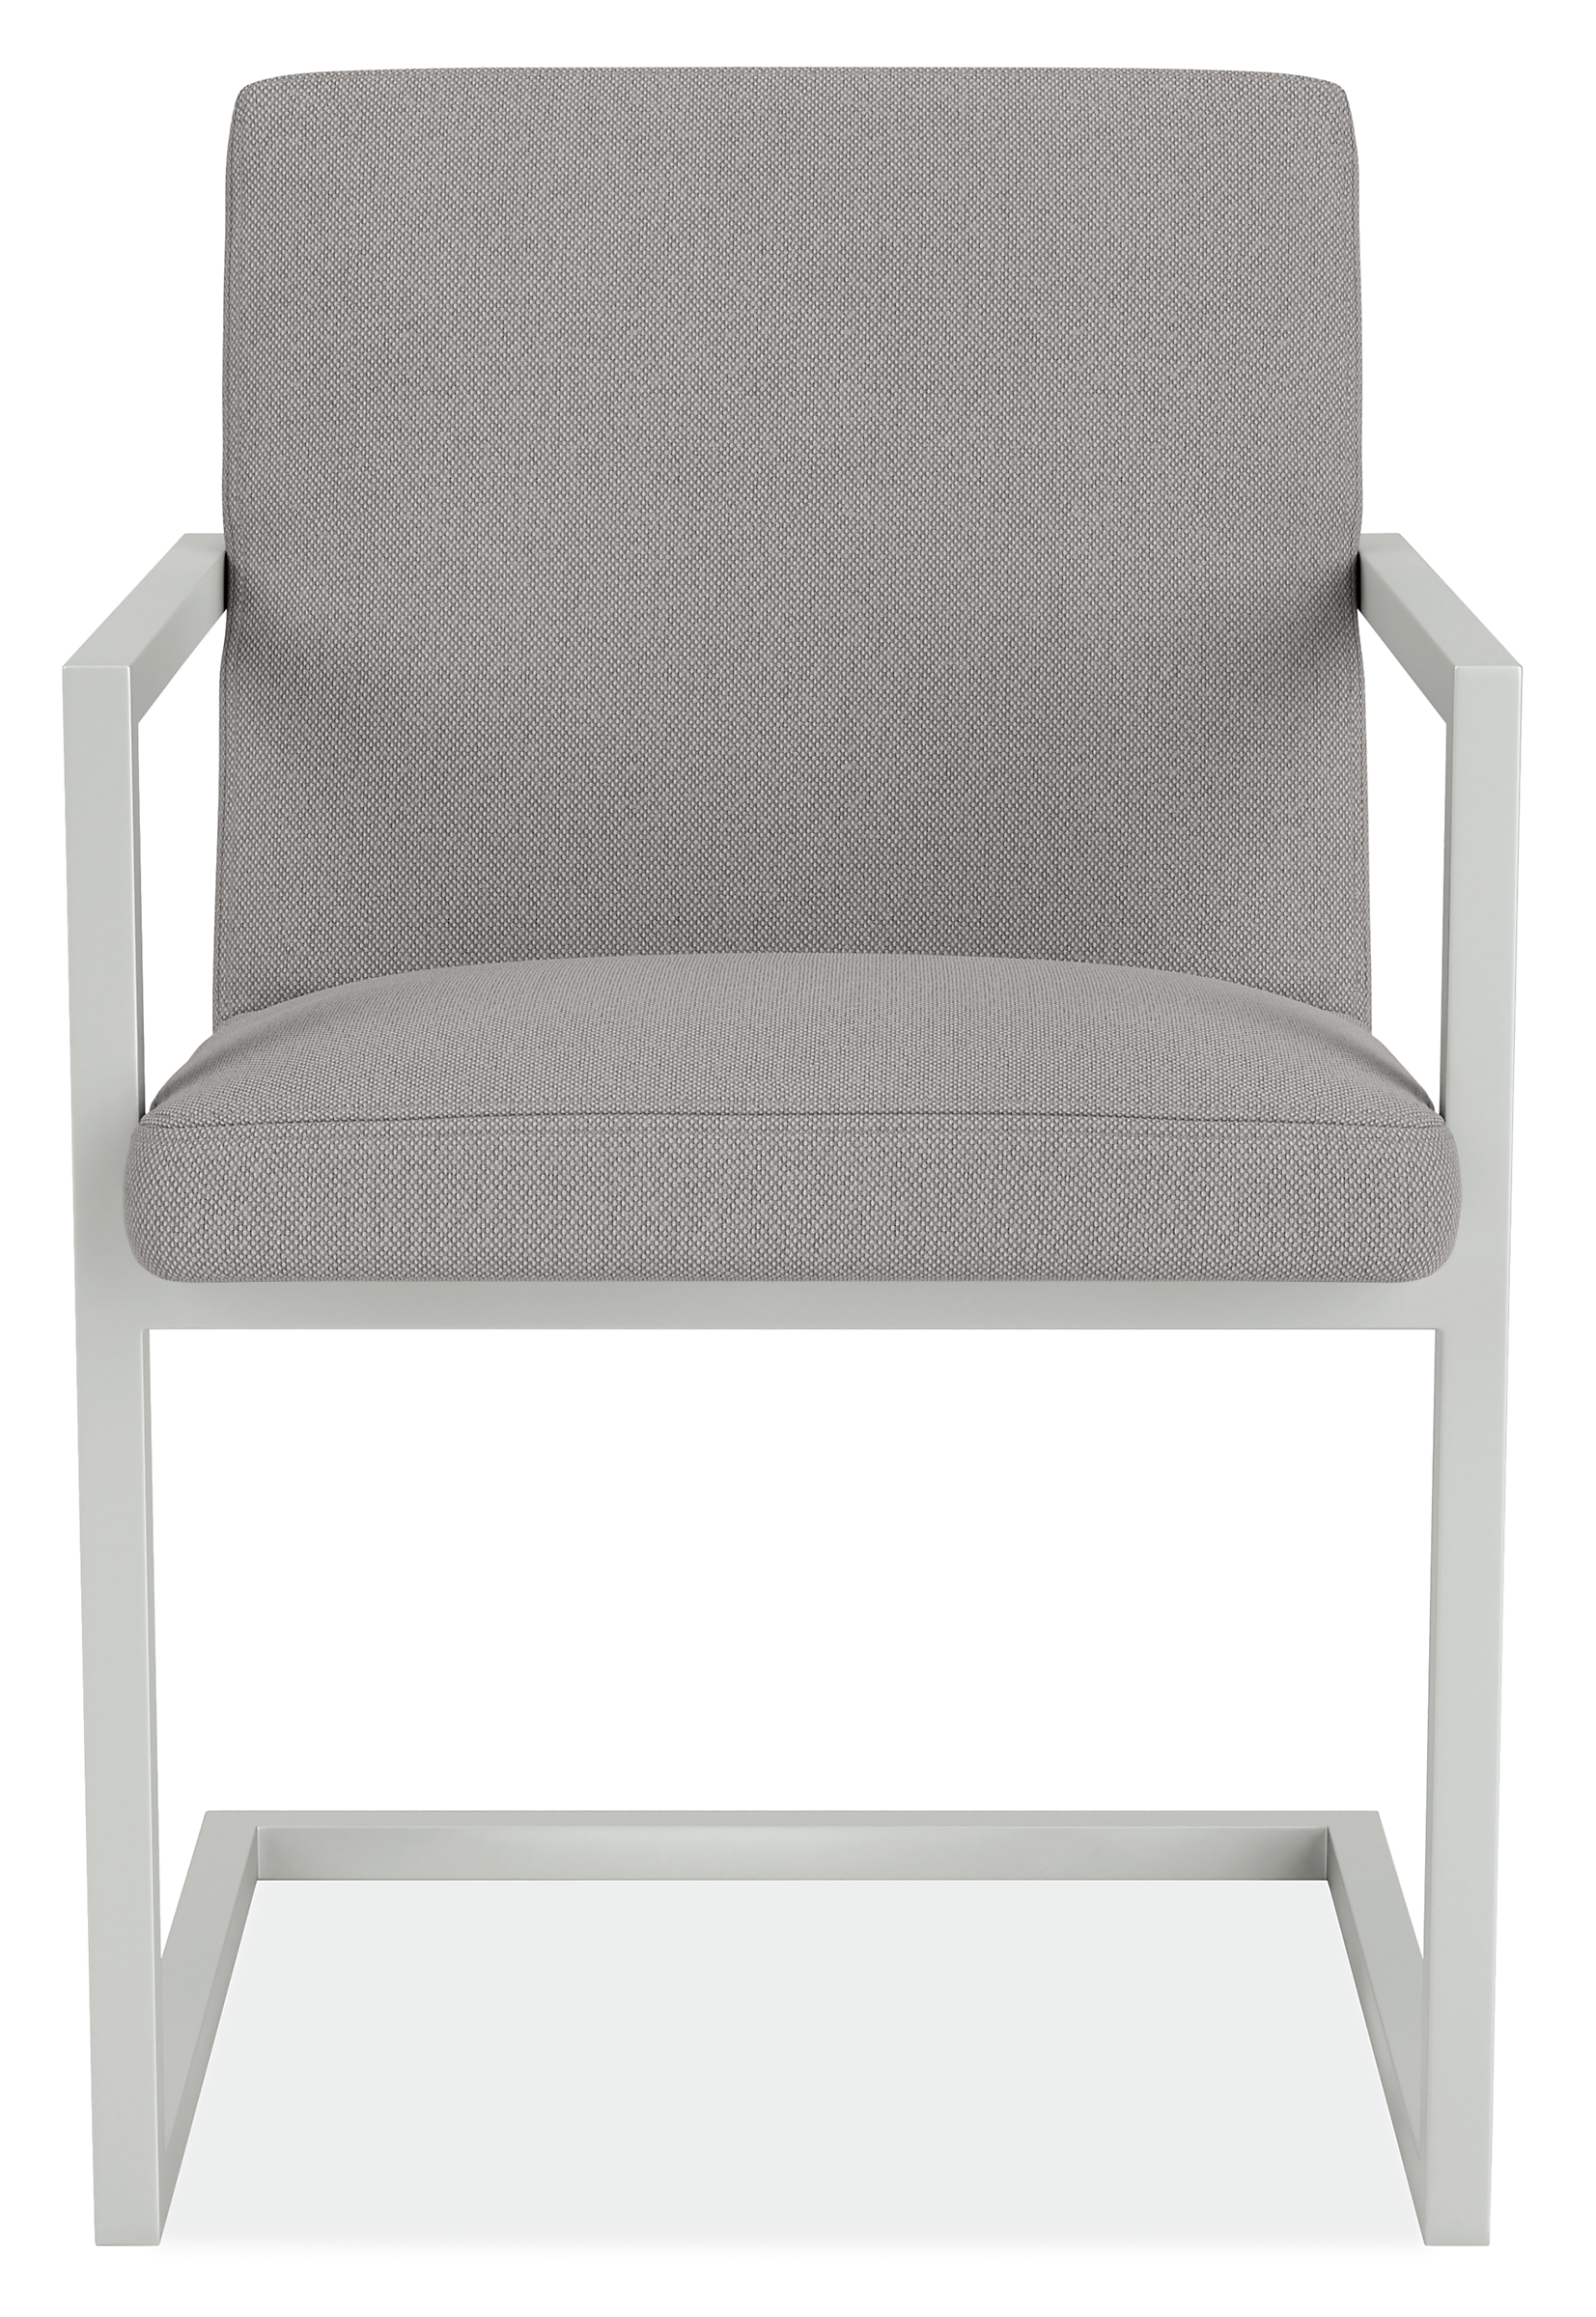 Front view of Finn Arm Chair in Pelham Fabric.